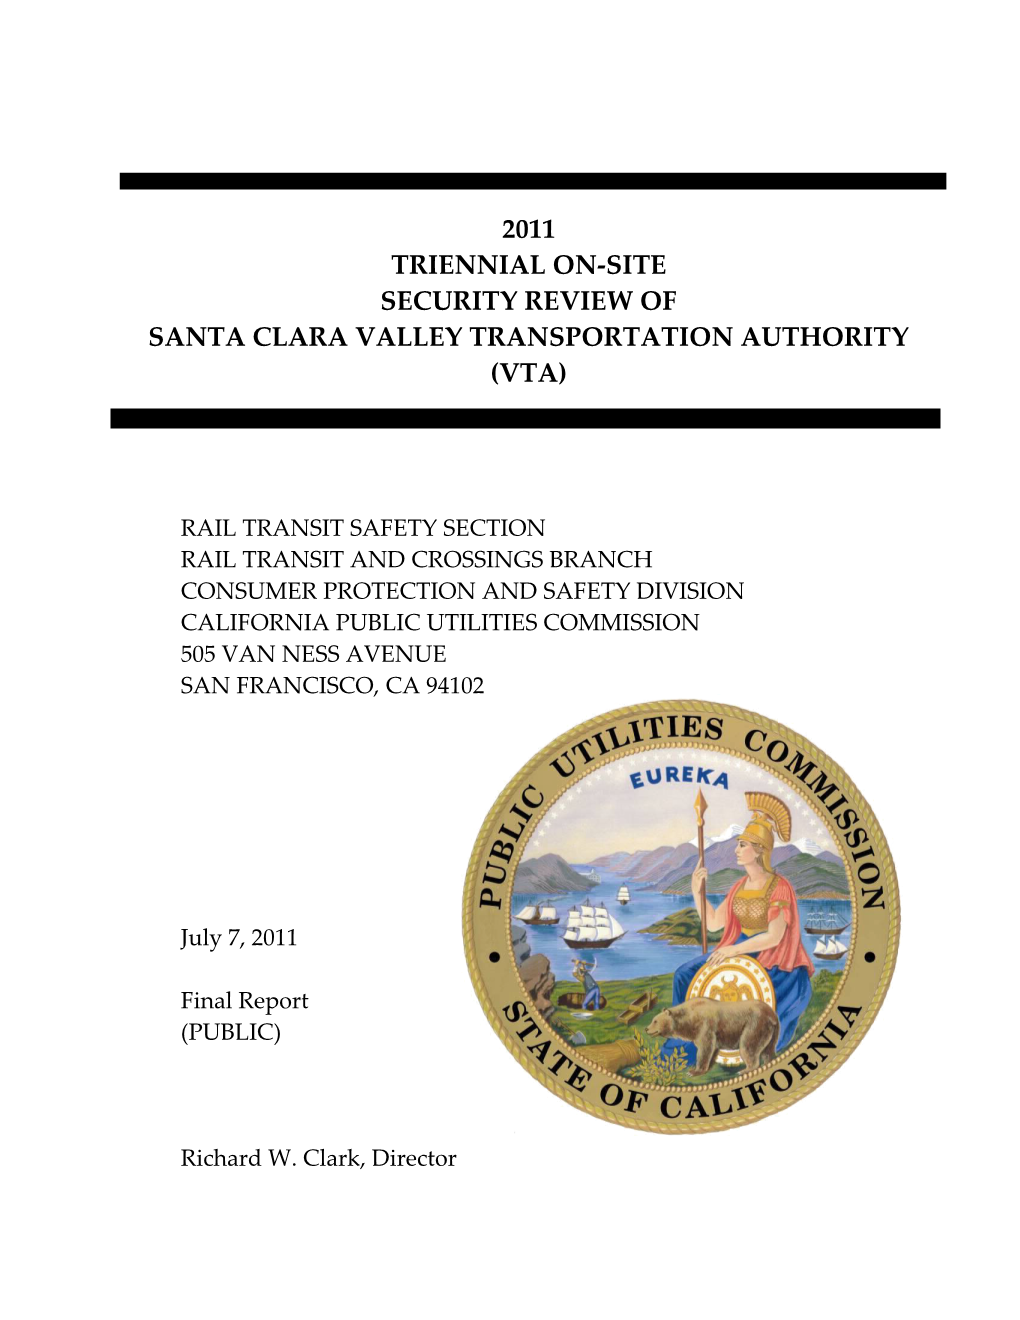 Santa Clara Valley Transportation Authority (Vta)